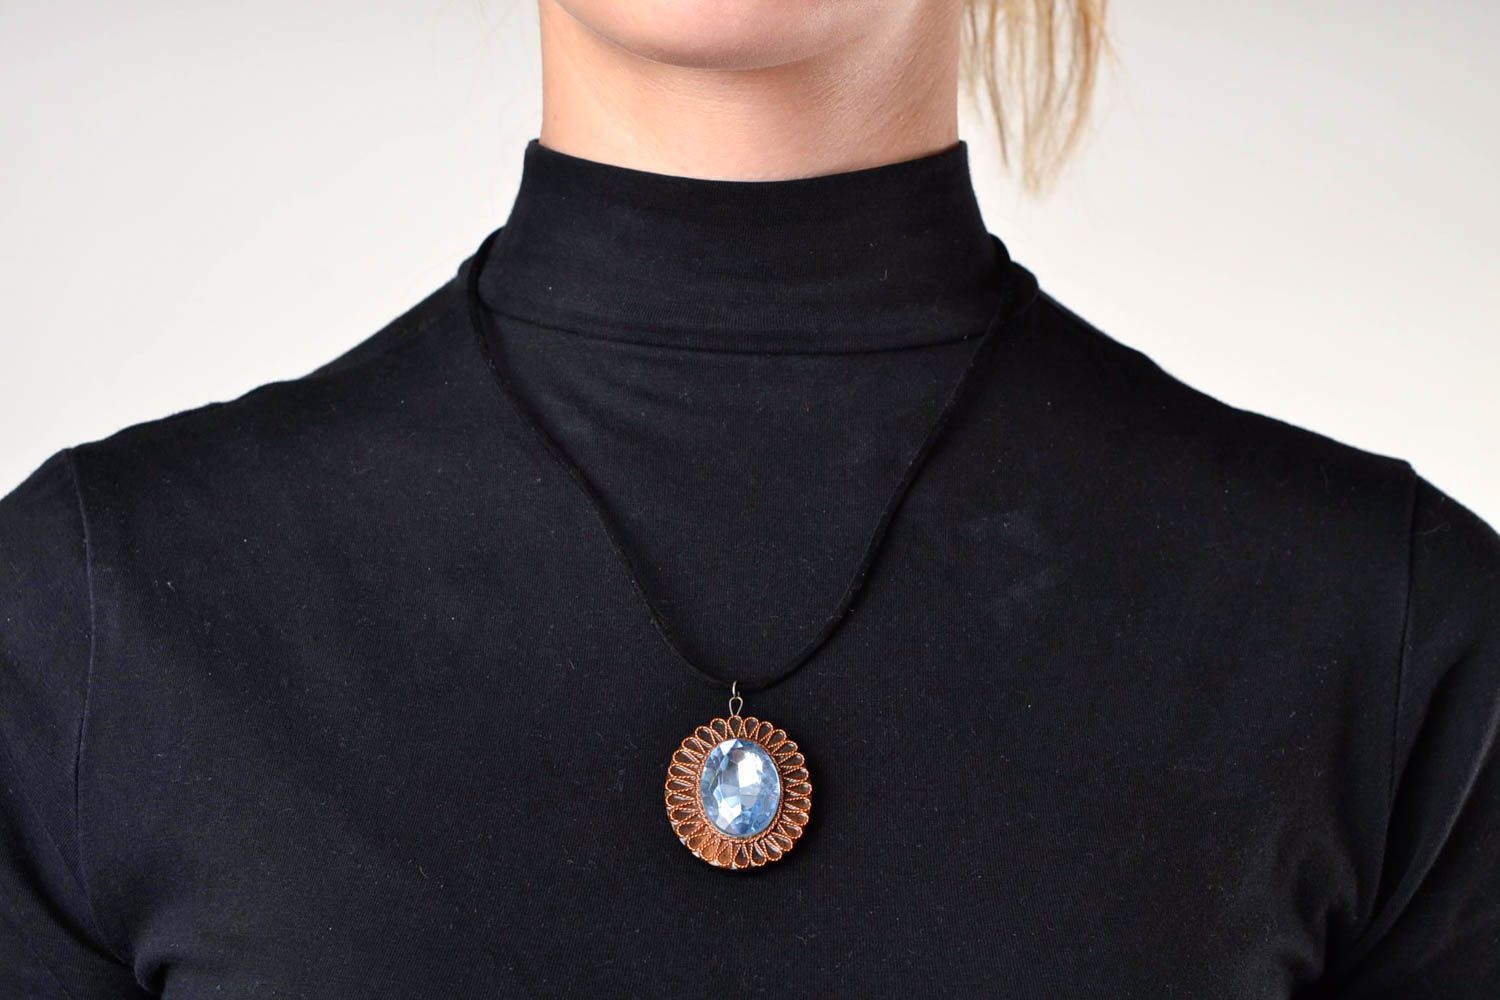 Handmade necklace wood pendant designer accessories pendant necklace gift ideas photo 1